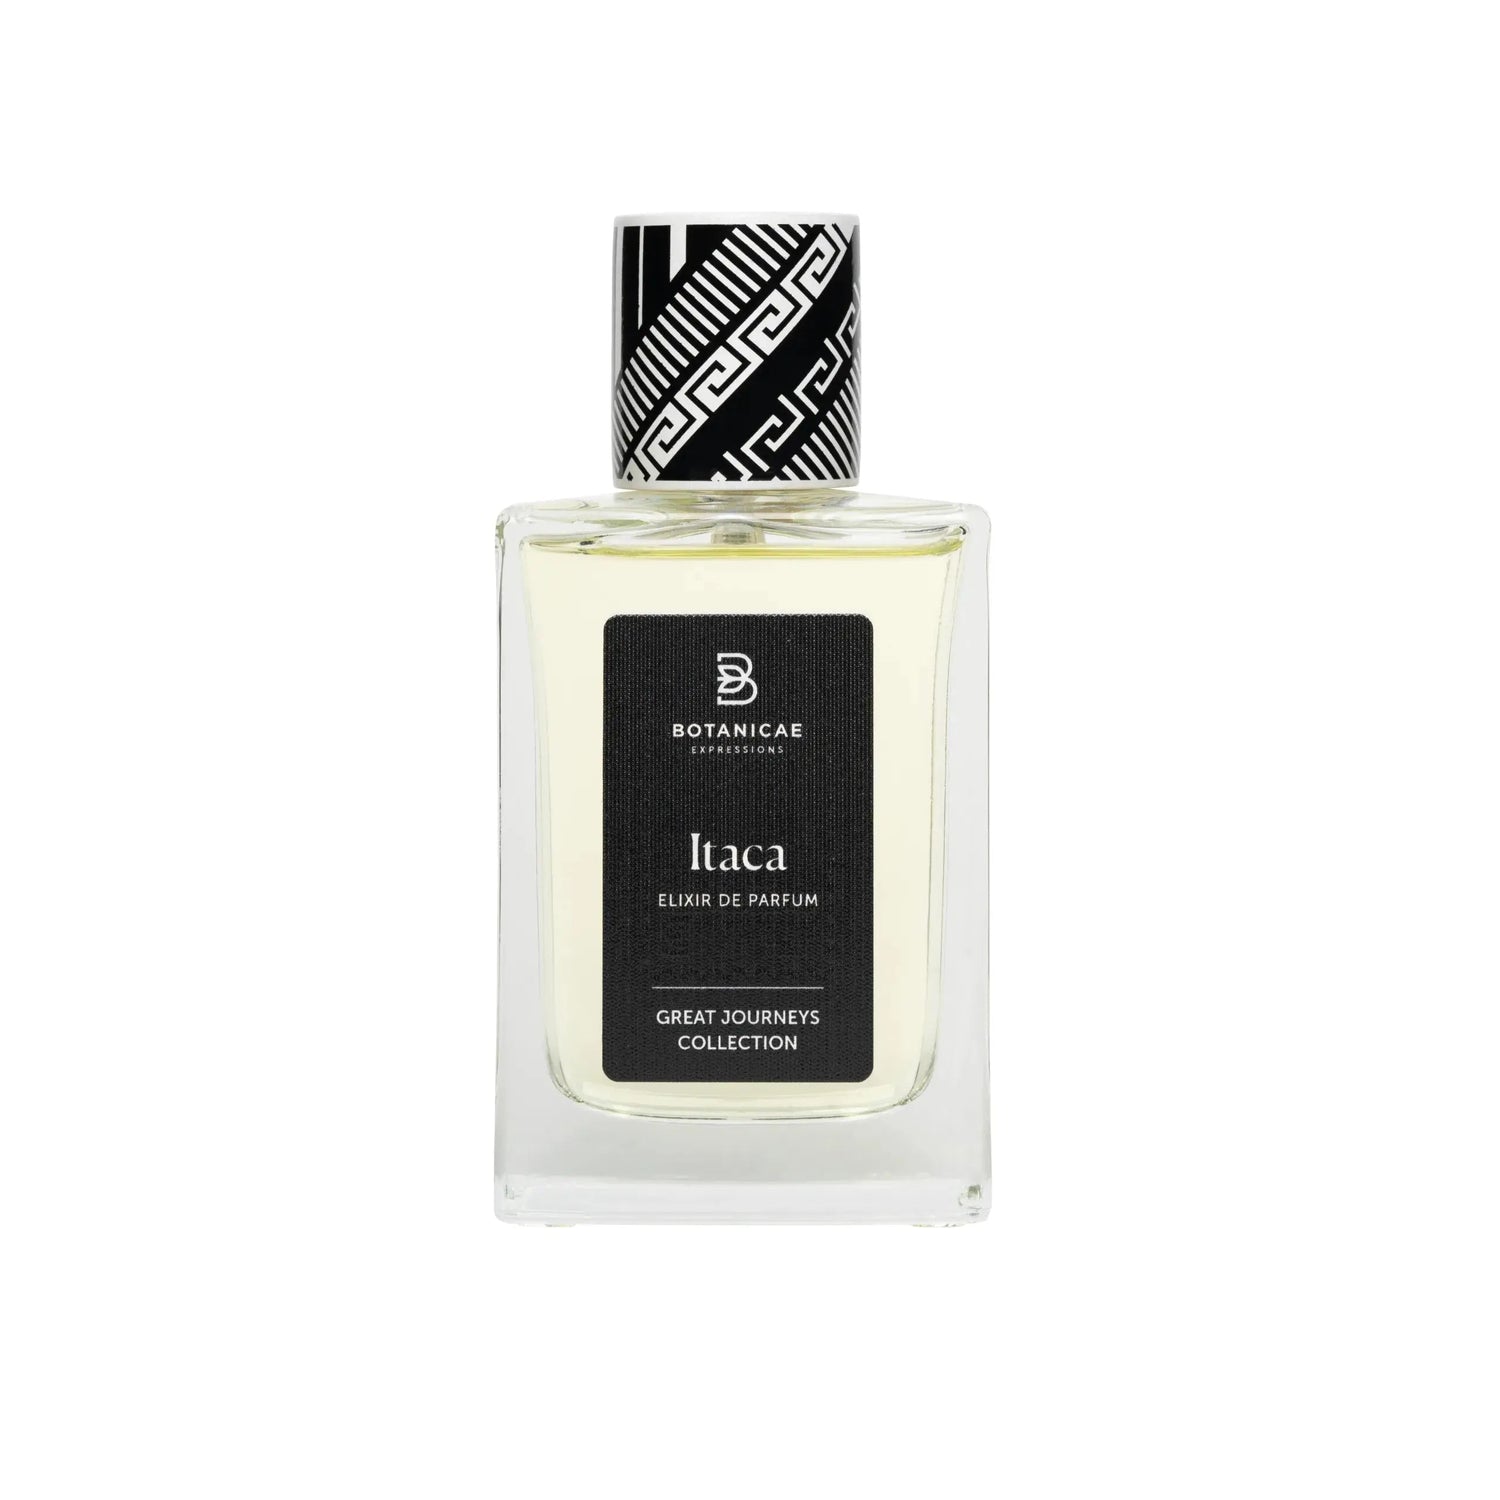 Itaca Elixir de Parfum Botanicae - 75 мл